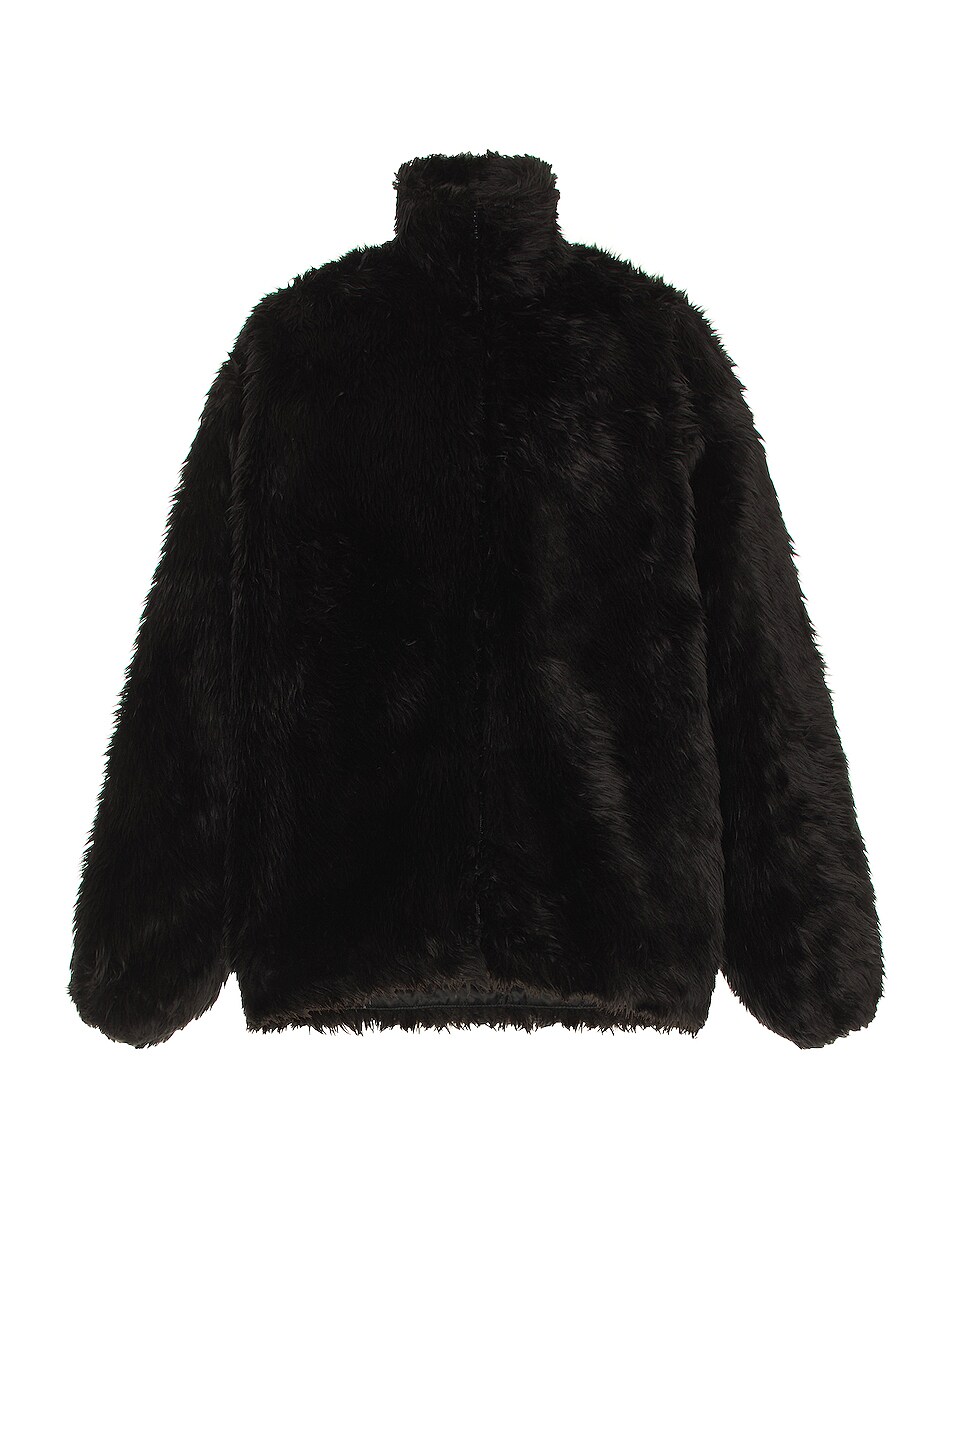 Image 1 of Balenciaga Zip Up Jacket in Black